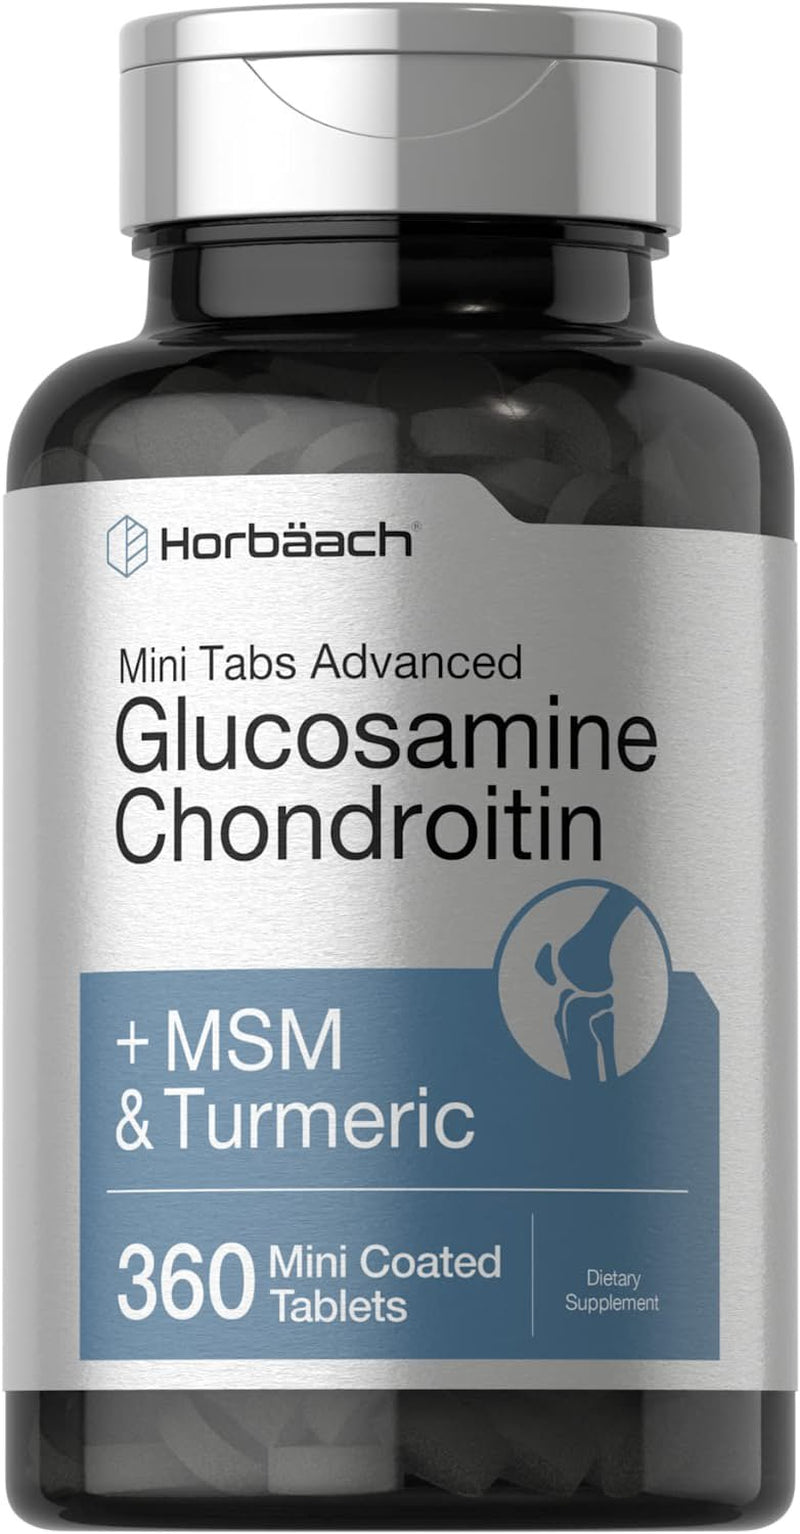 Glucosamine Chondroitin MSM plus Turmeric | 360 Mini Coated Tablets |By Horbaach